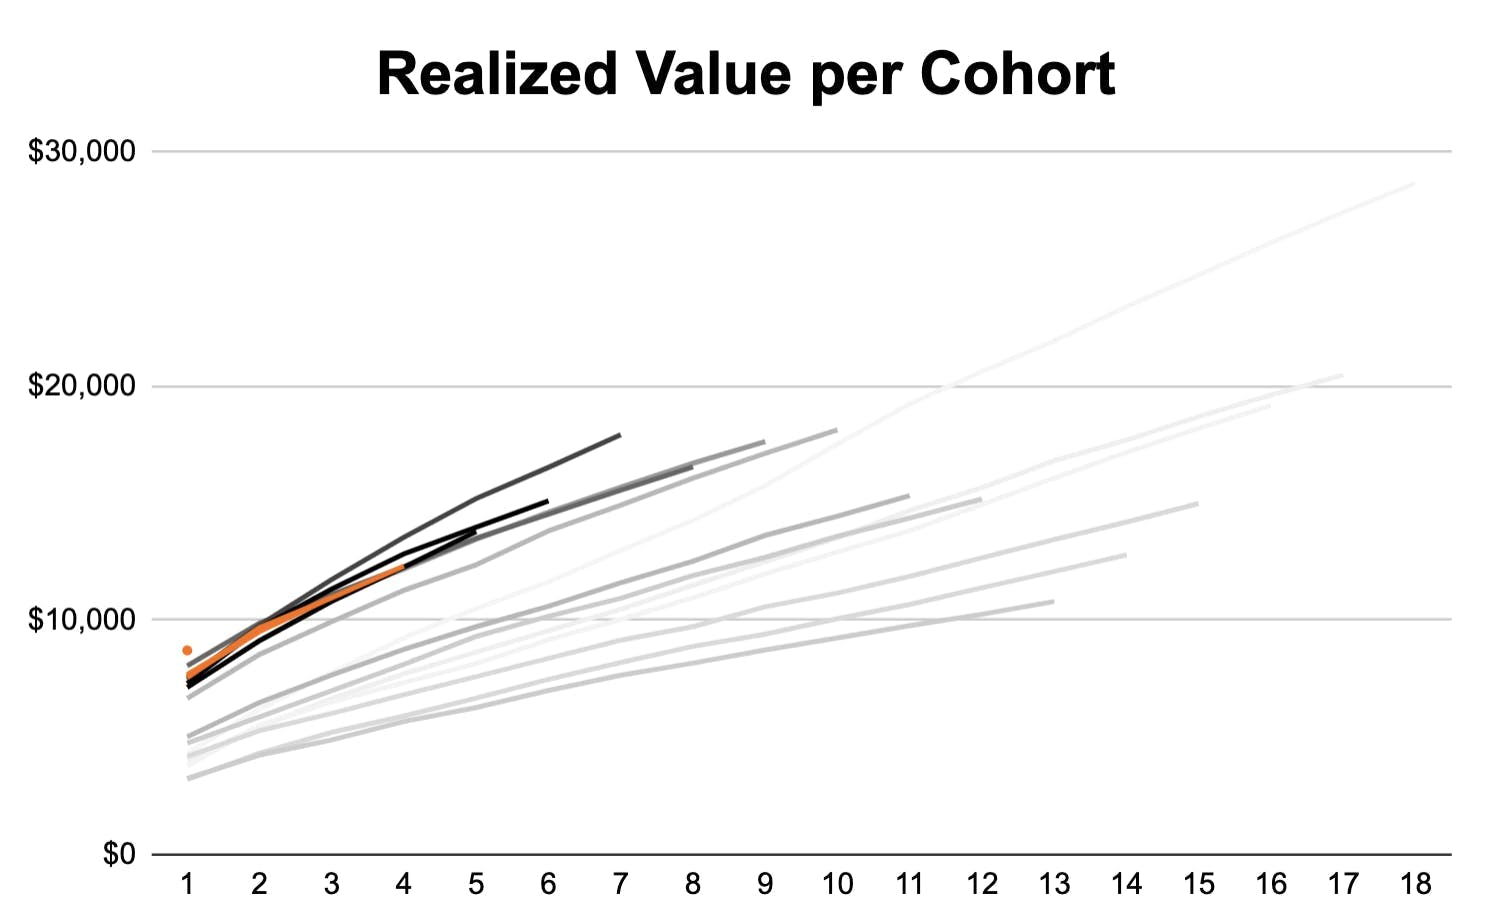 Illustrative Realized Value per Cohort